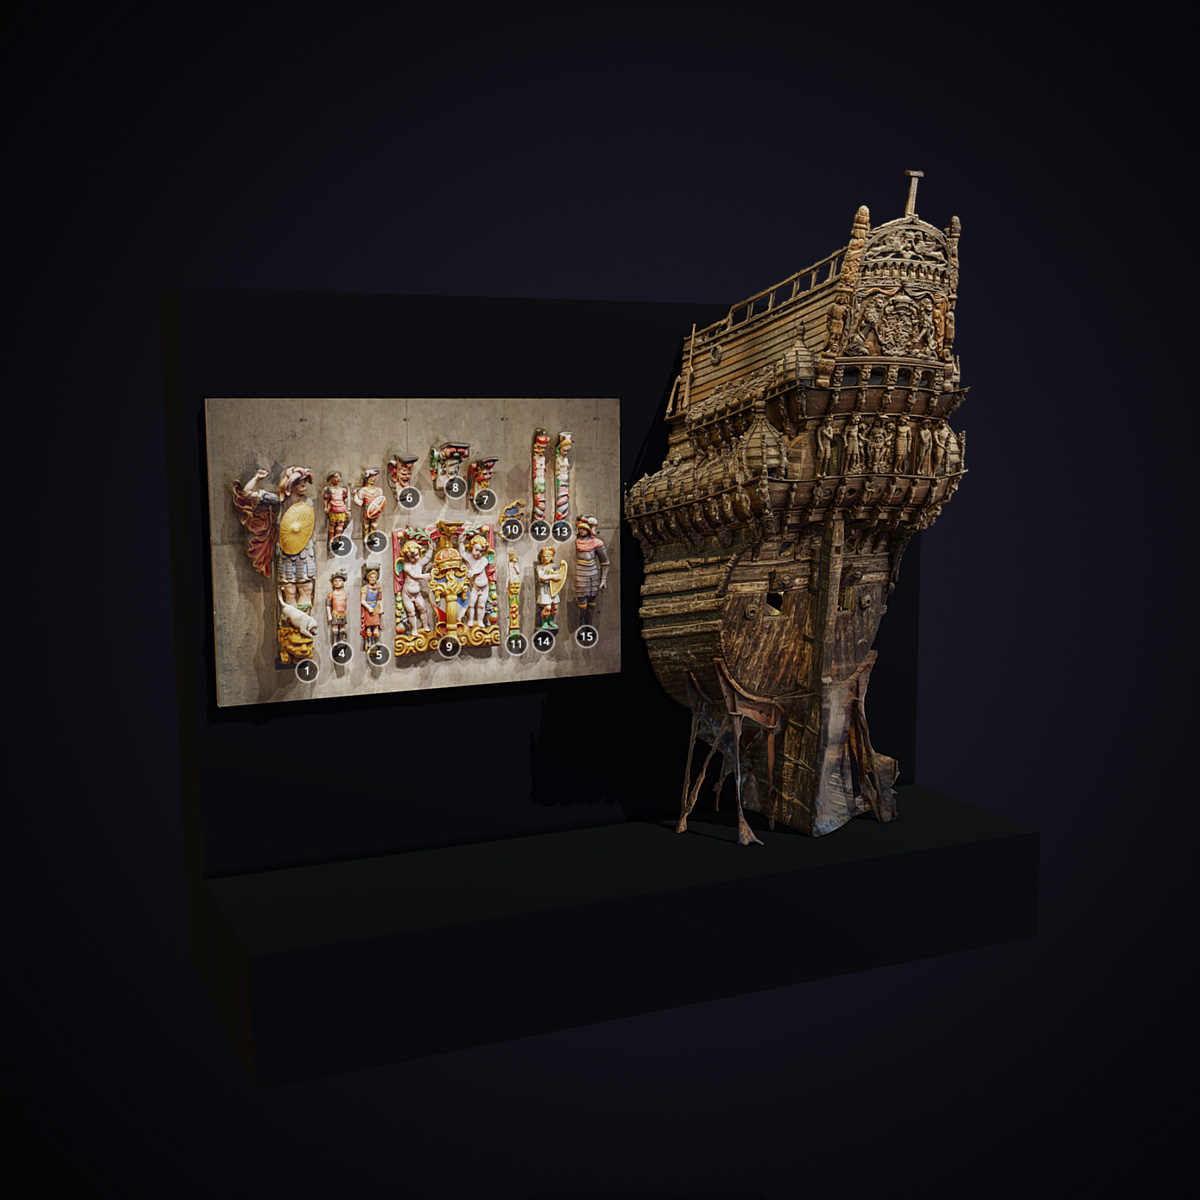 Sculptures of Vasa warship